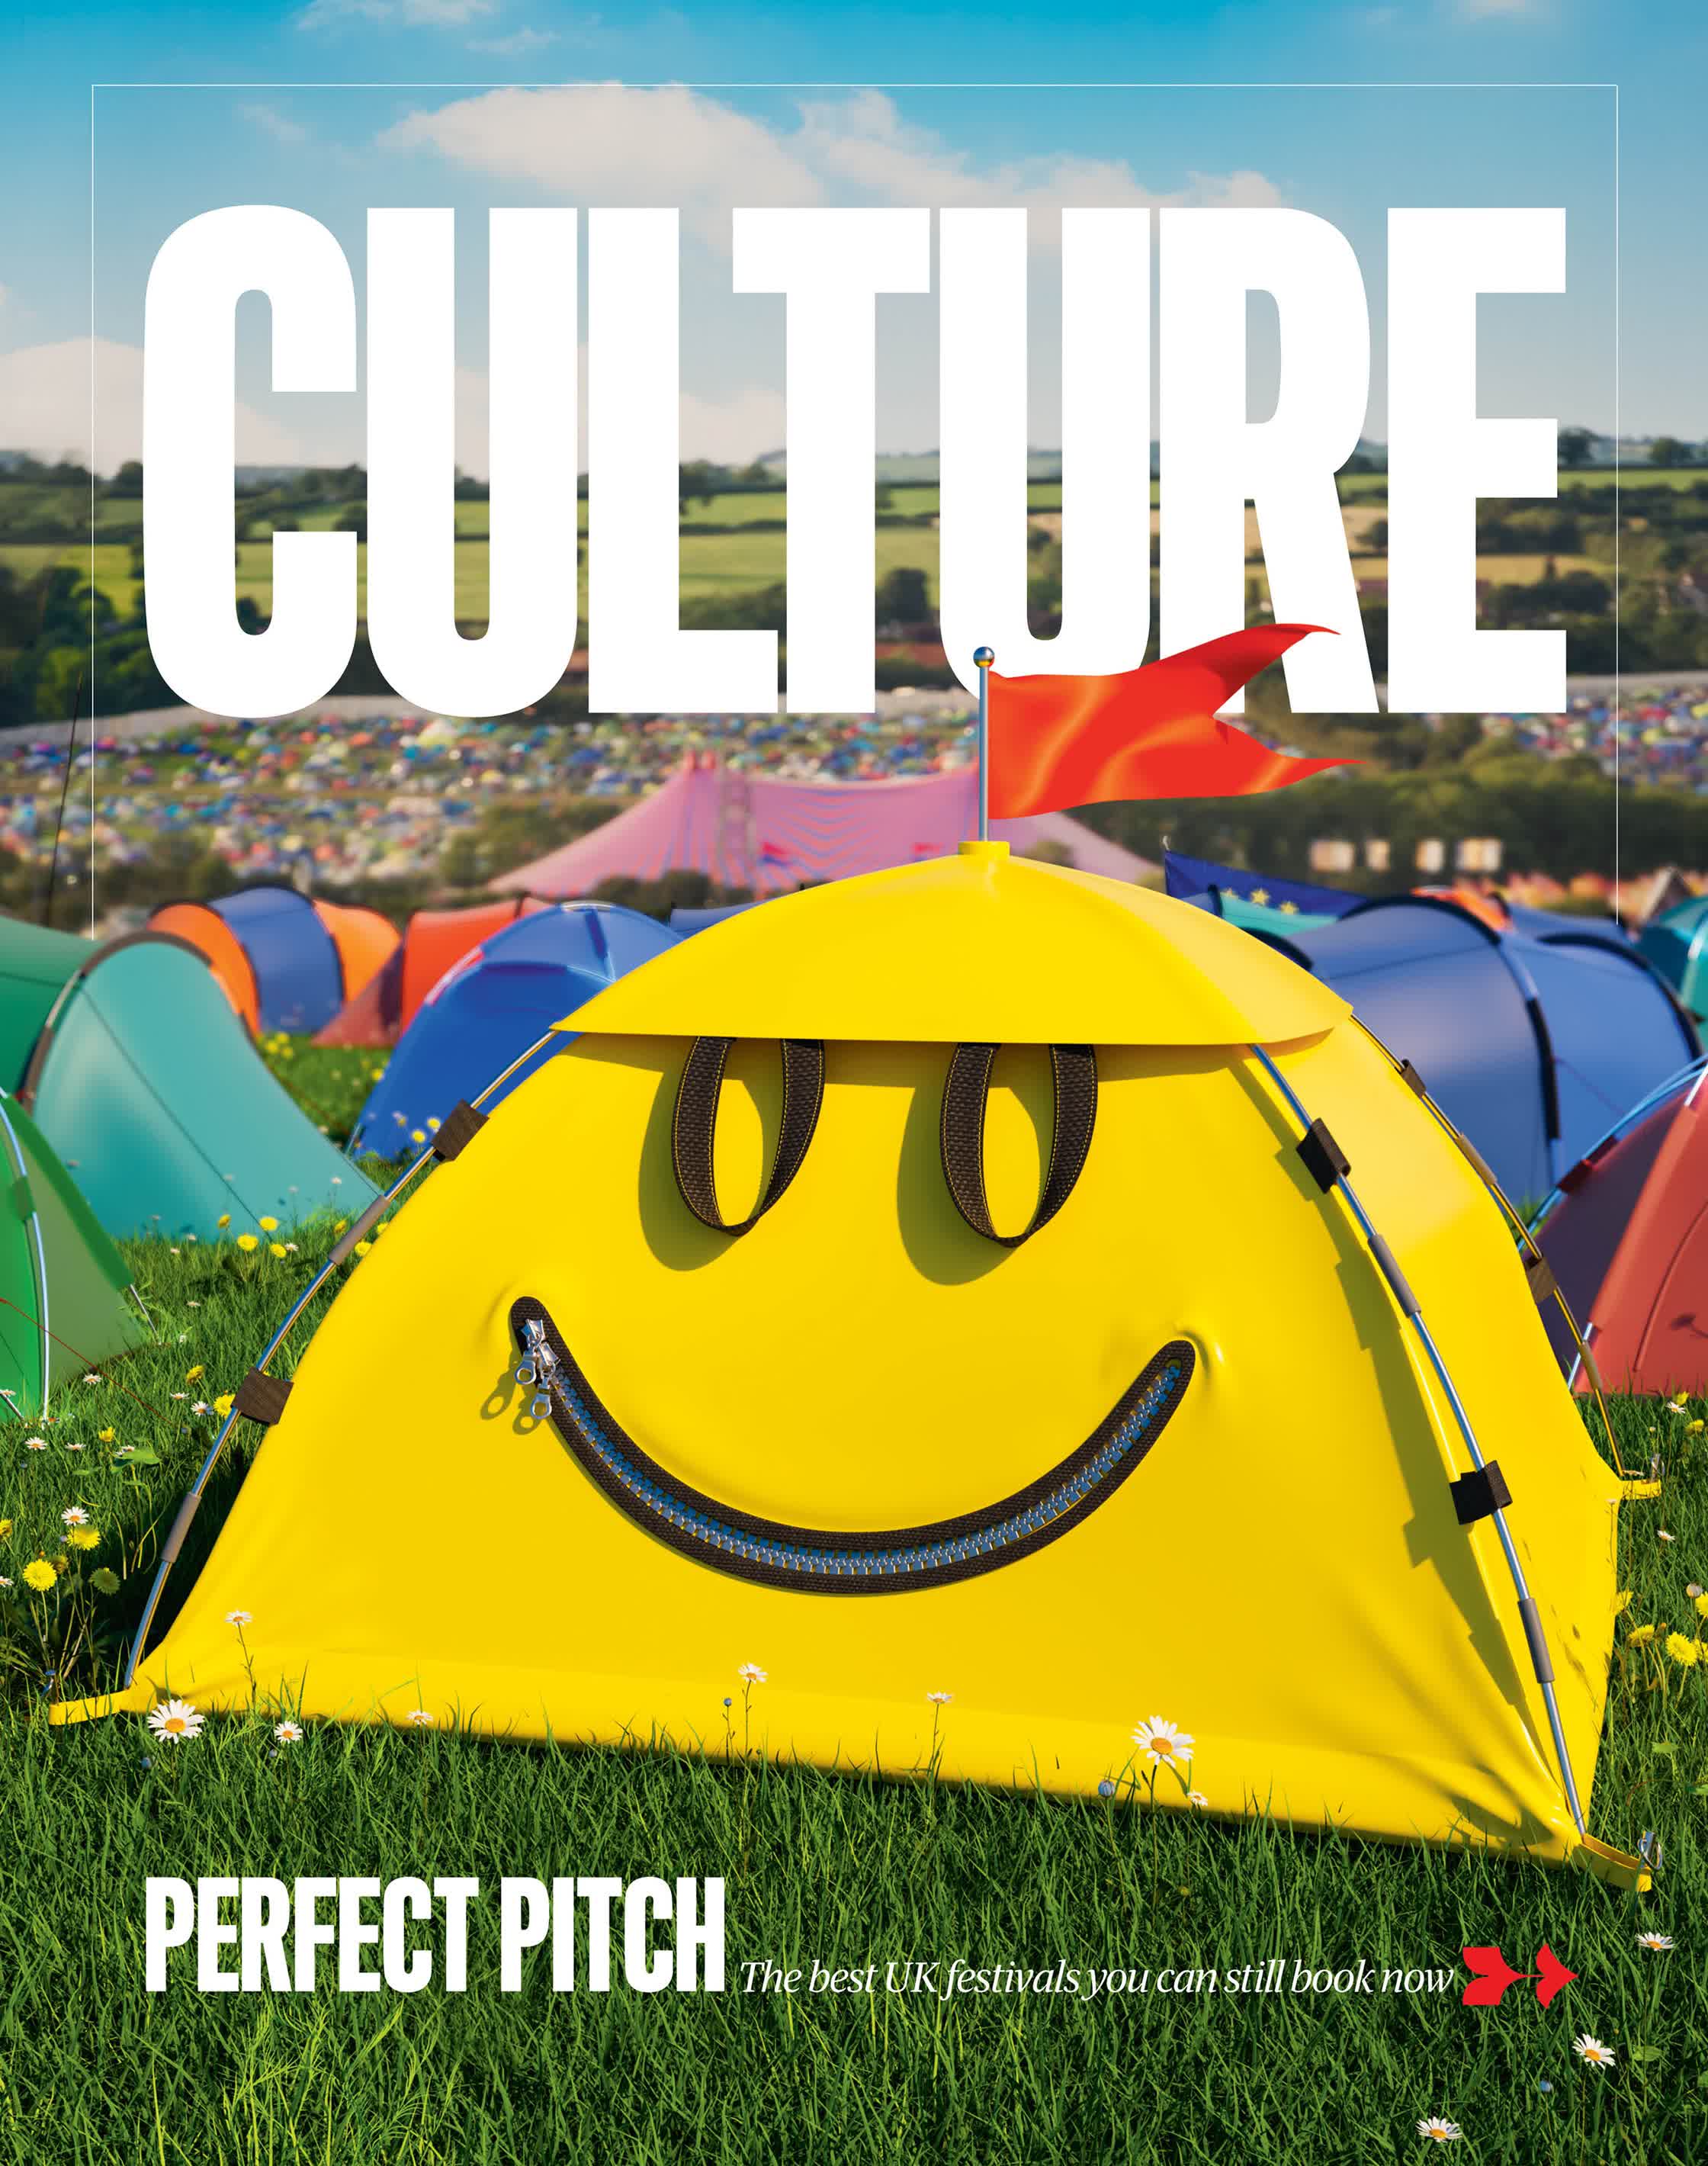 Culture cover festivals.jpg